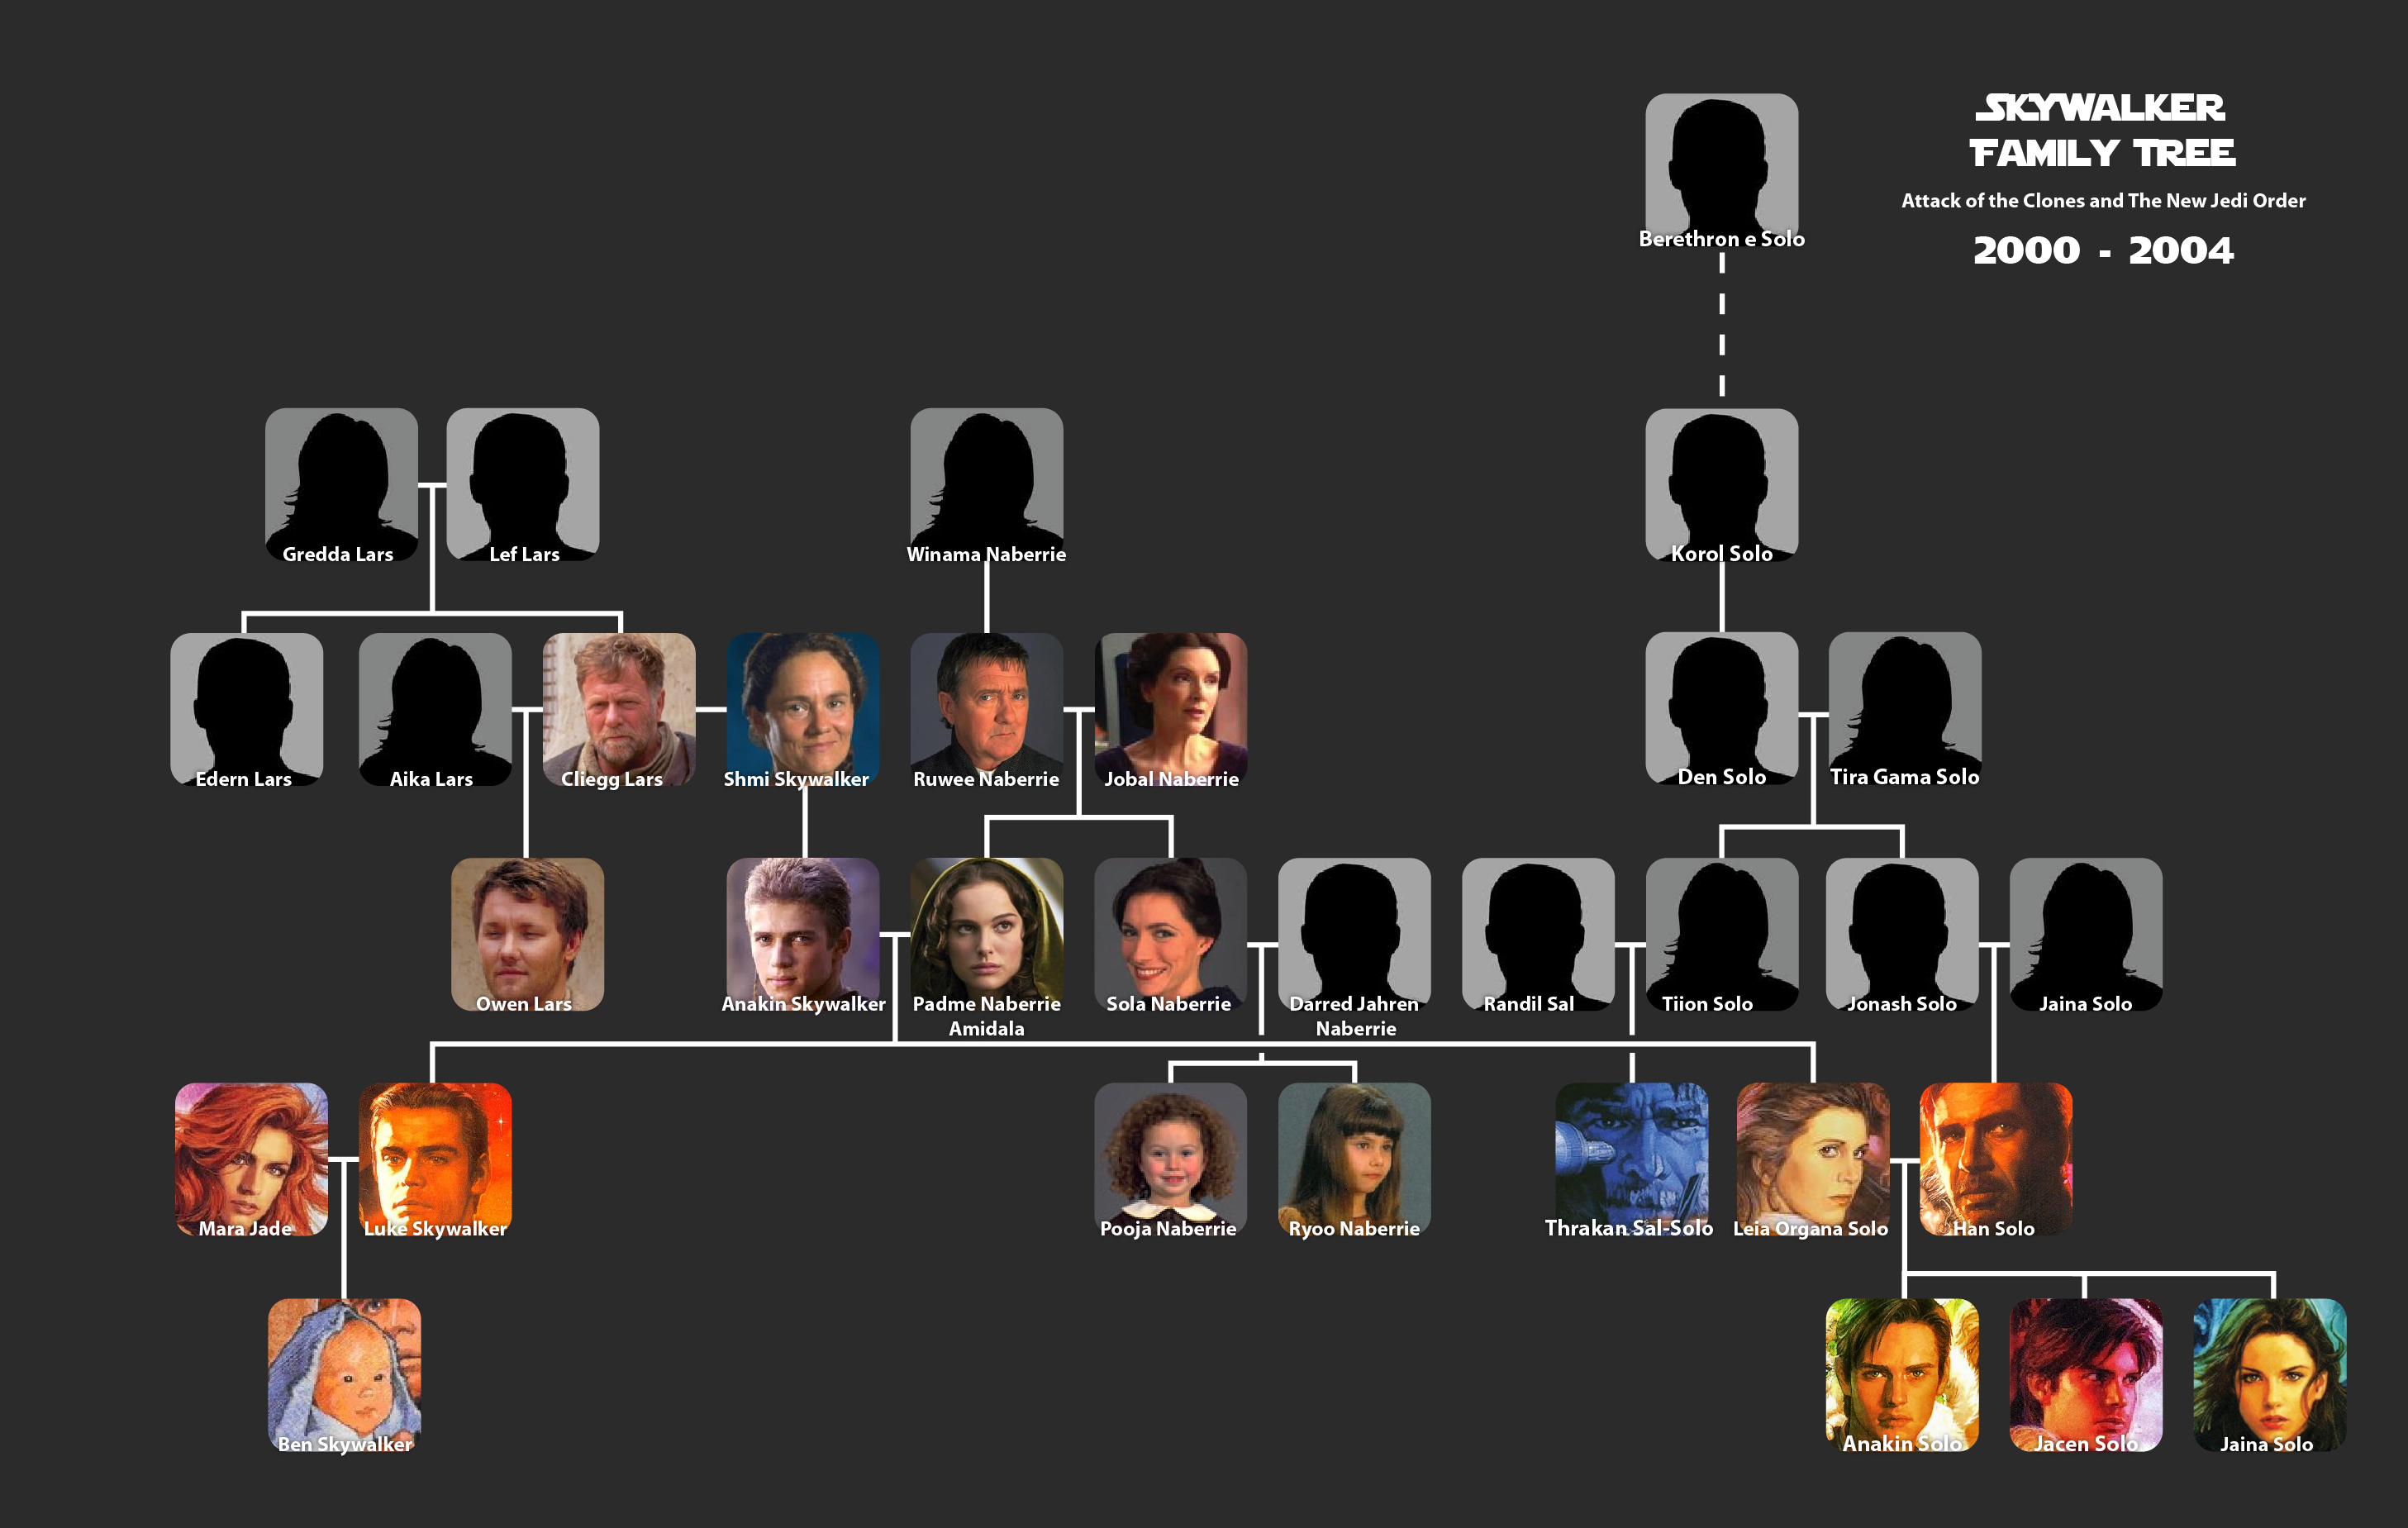 Star Wars Family Chart